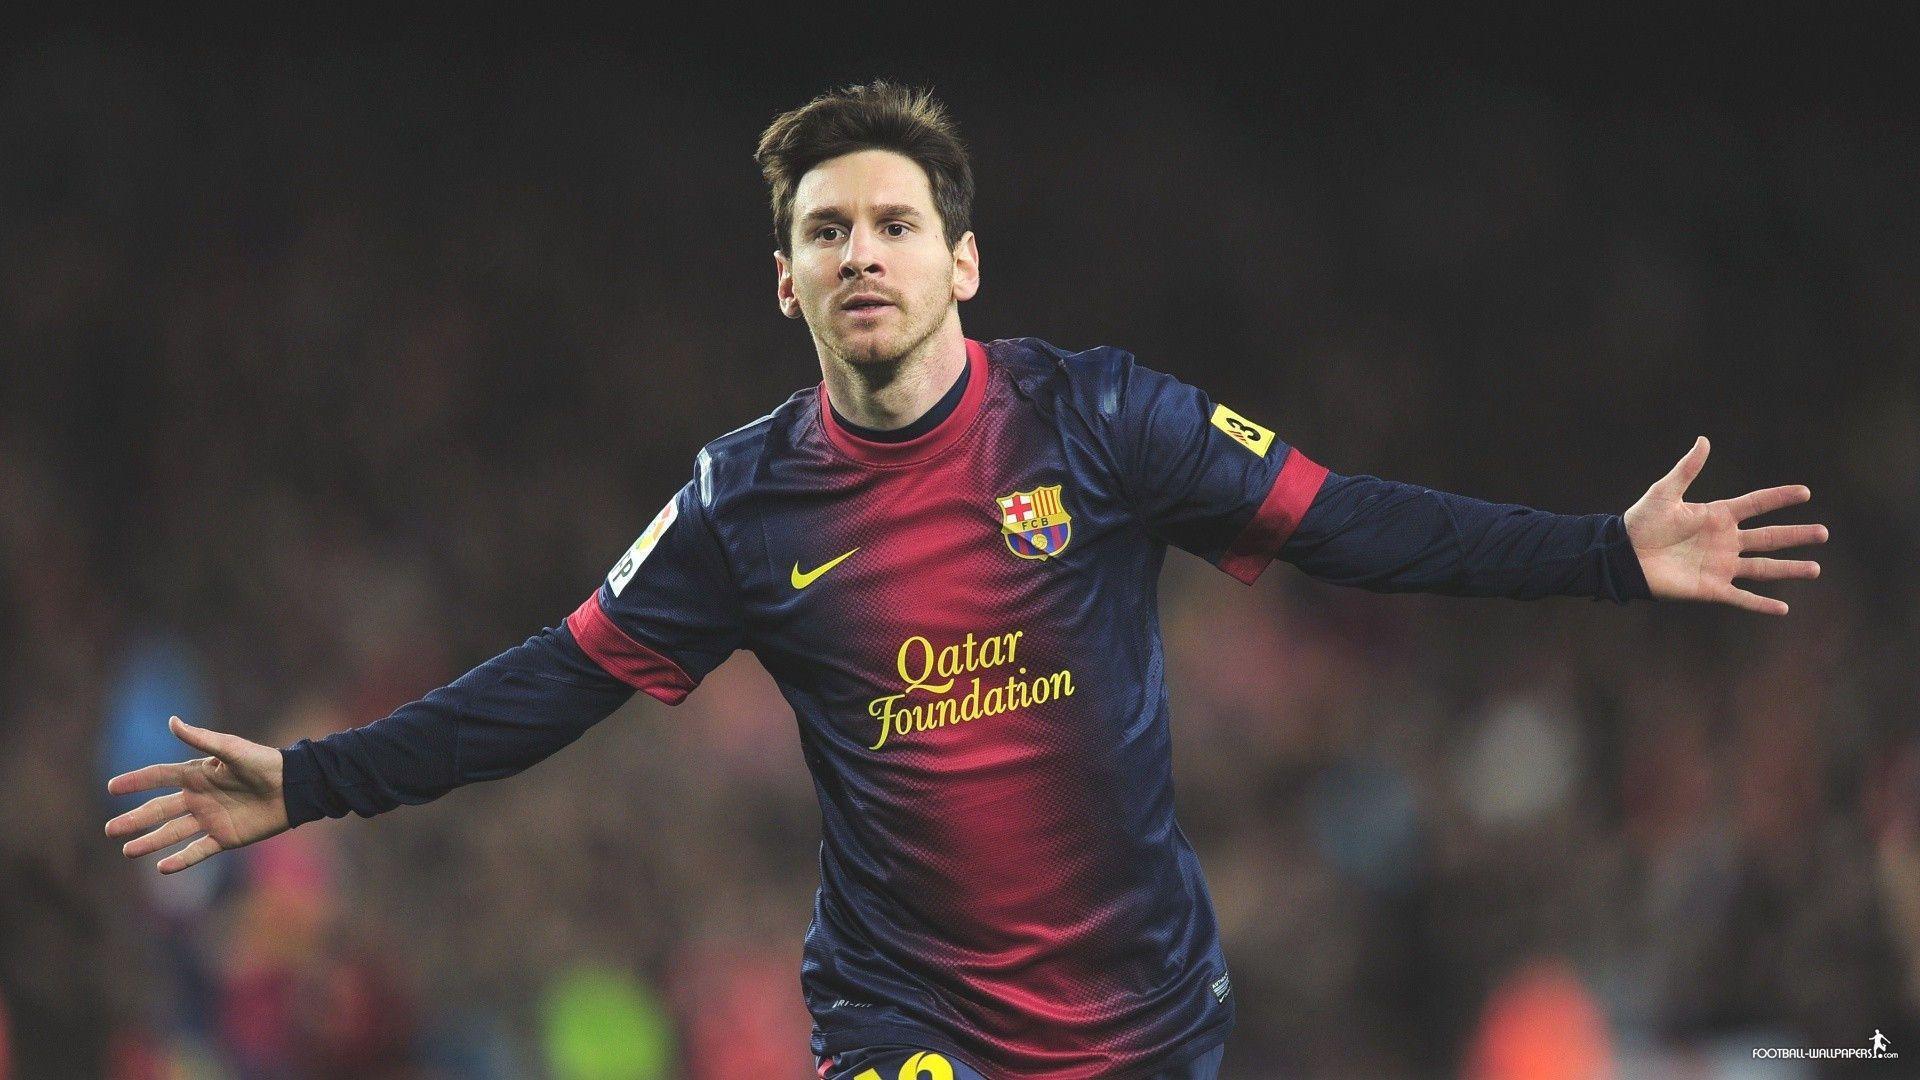 Lionel Messi Goal Celebration La Liga Wallpaper: Players, Teams